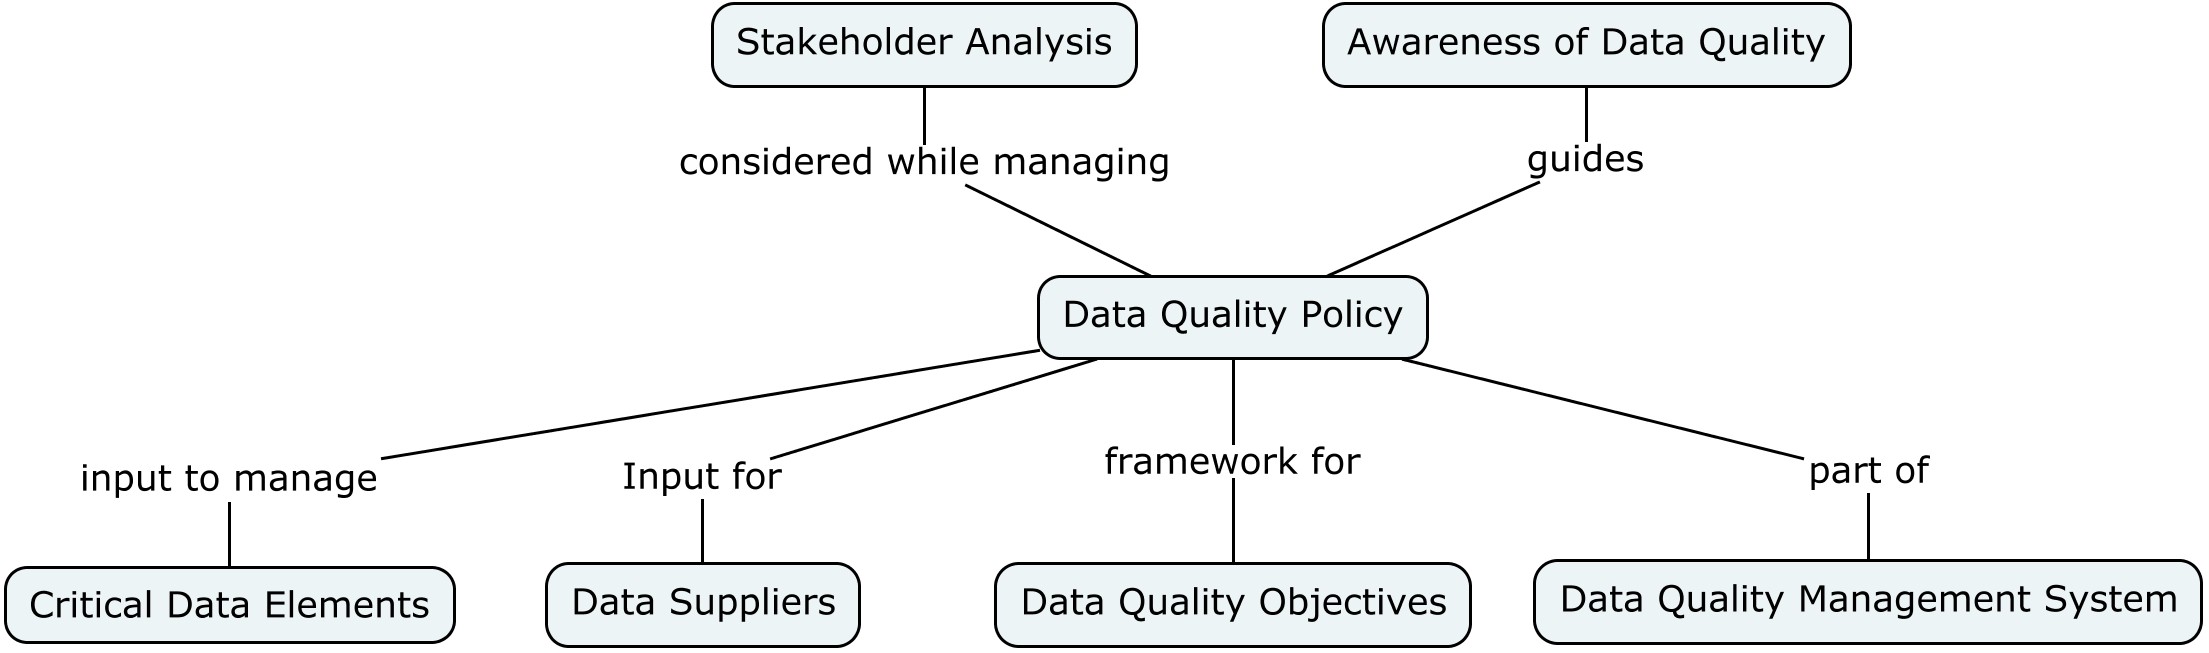 data_quality_policy.jpg